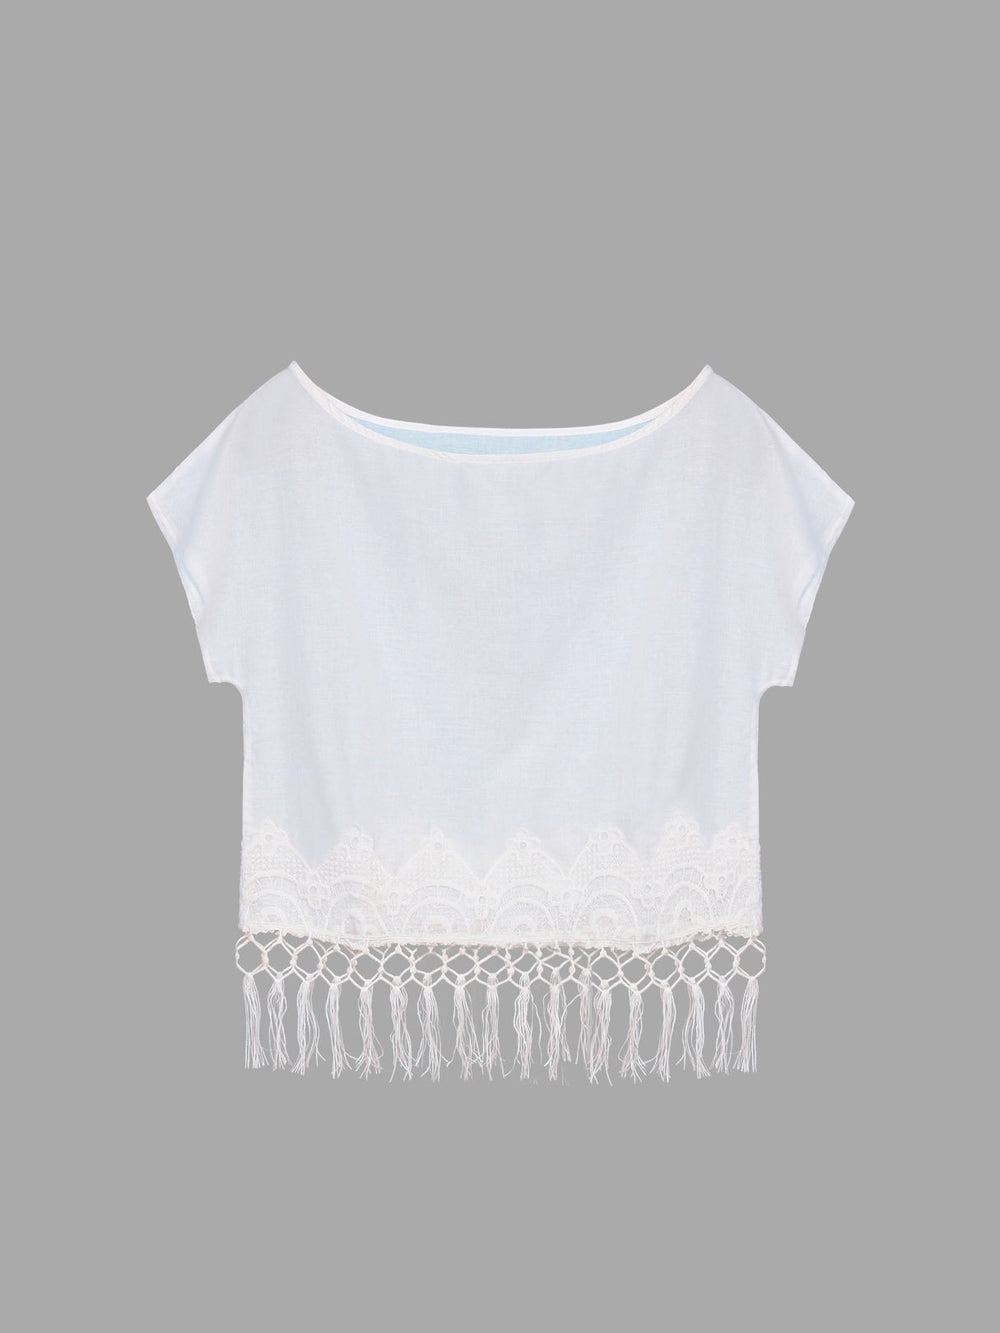 White Round Neck Tassel Crochet Lace Embellished Cover Ups Swimwear